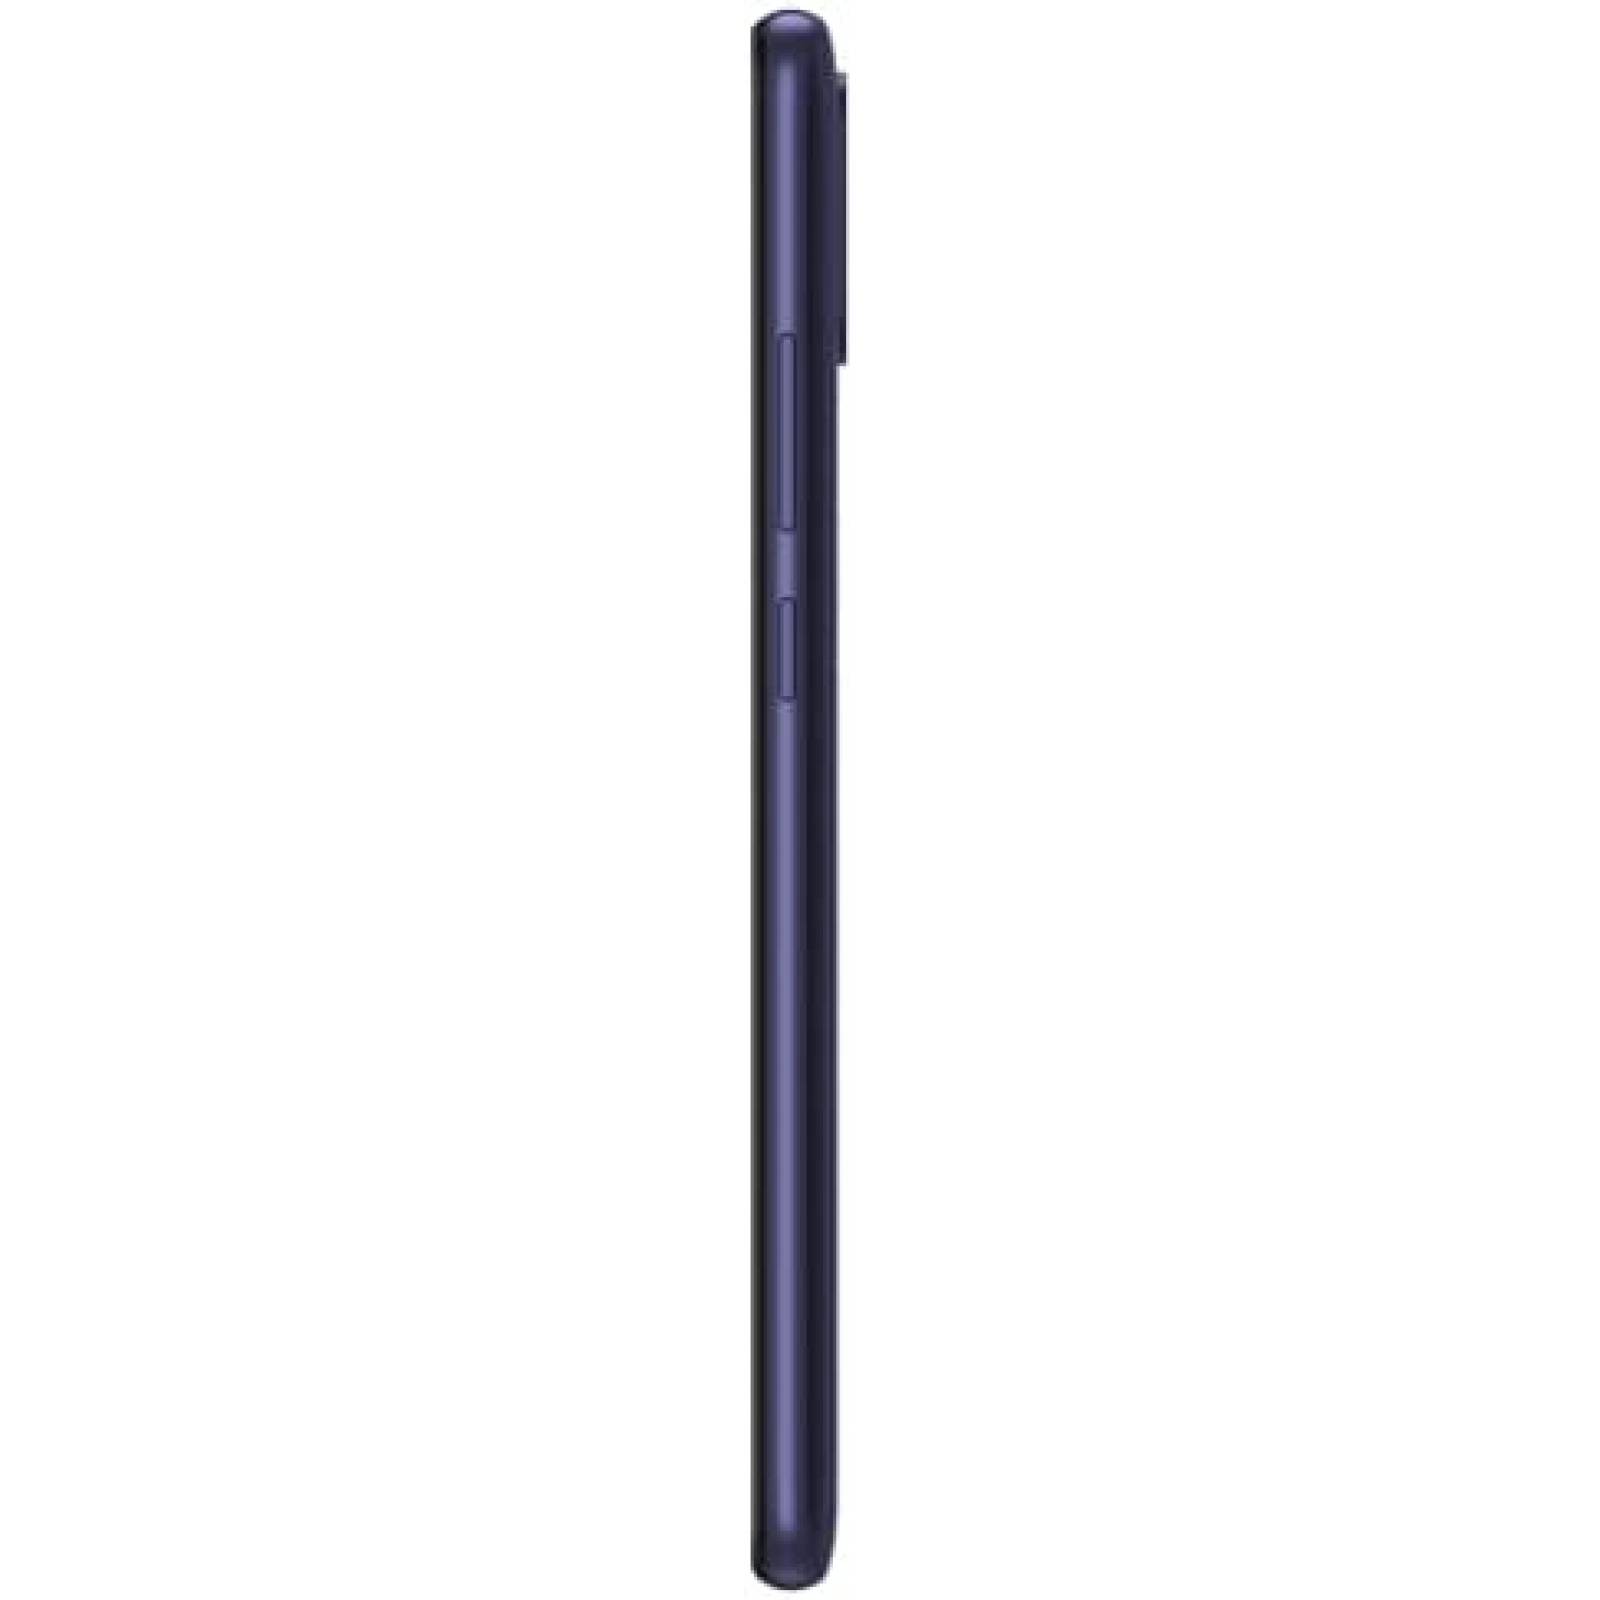 Celular Samsung Galaxy A3 6.5'' 4GB 64GB Android 10 -Azul